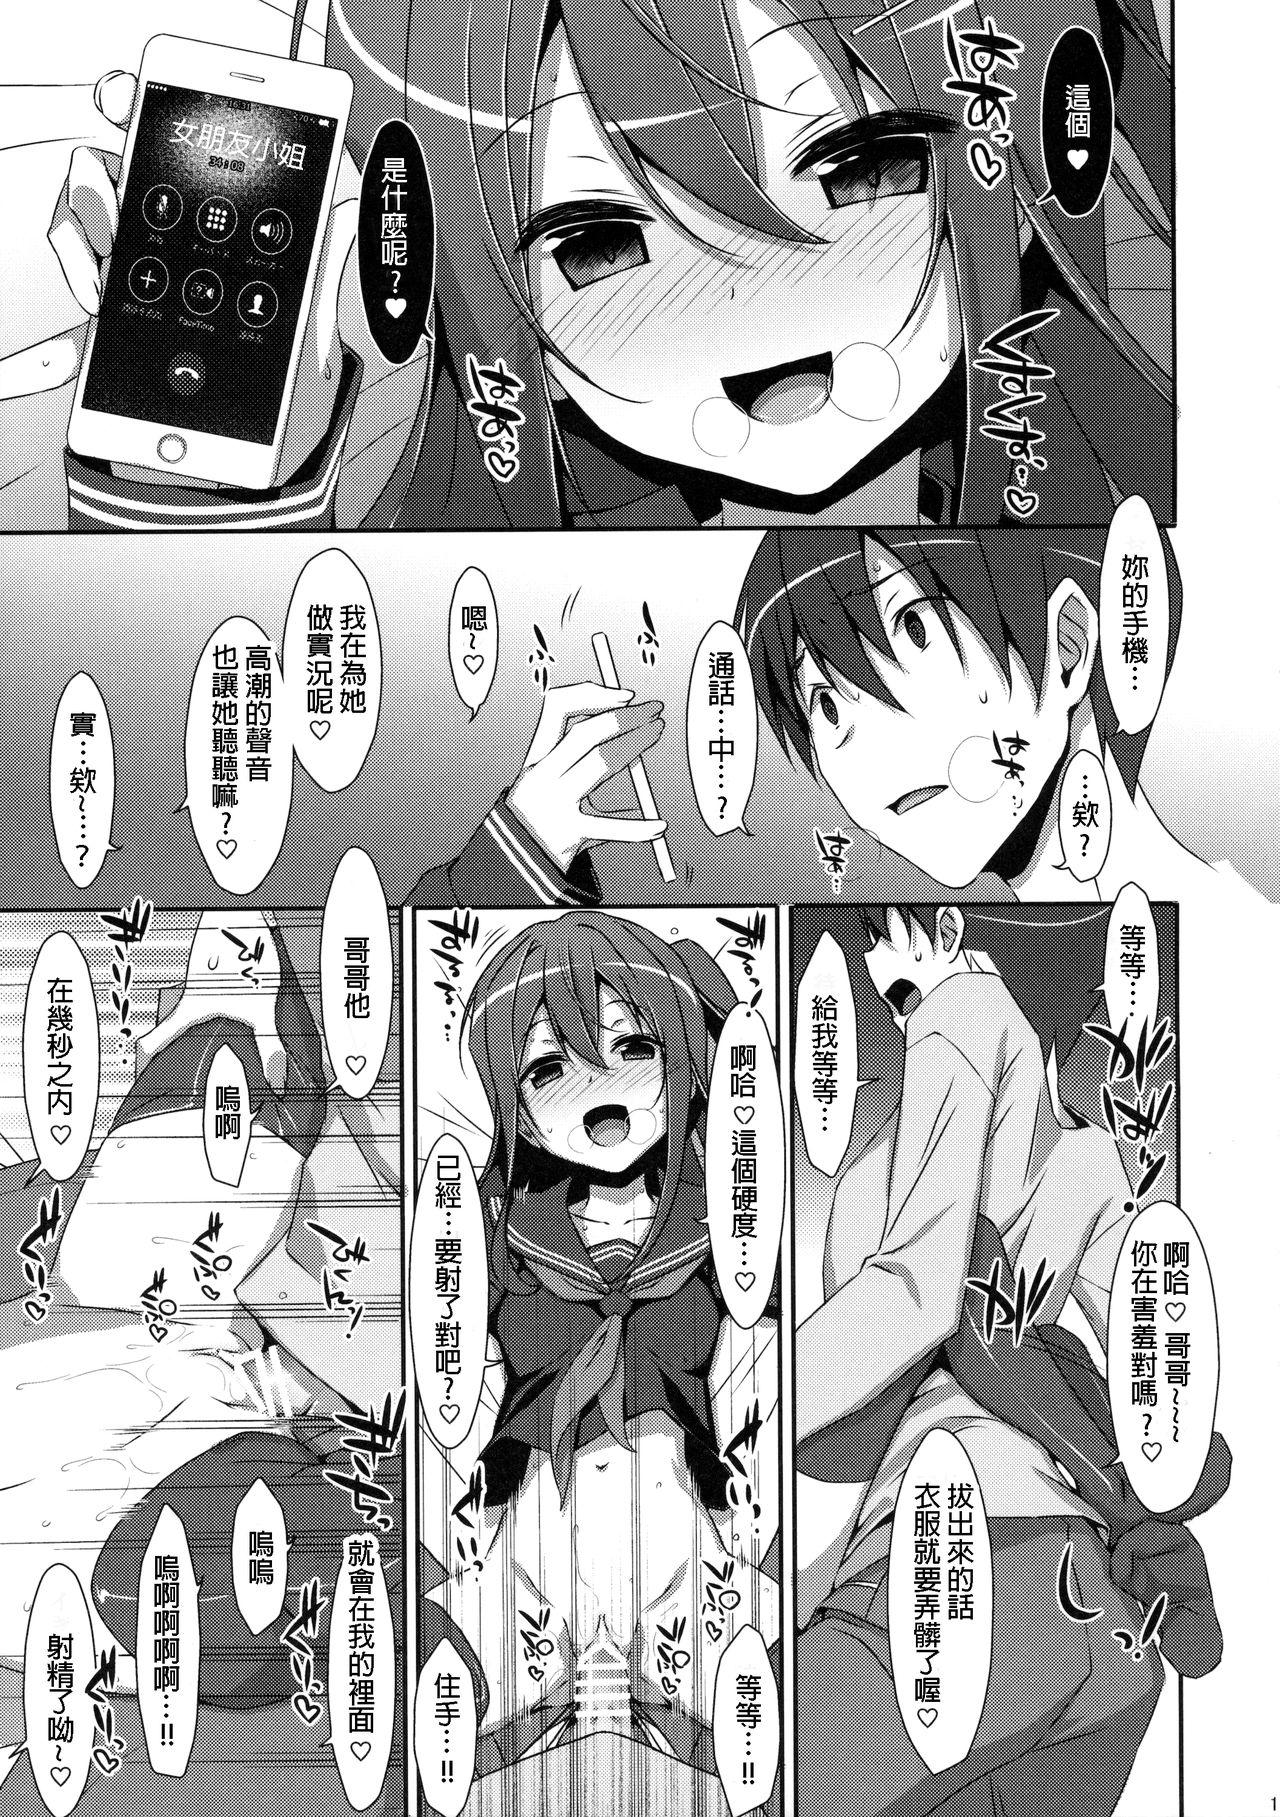 Curious Watashi no, Onii-chan 4 Black Dick - Page 11